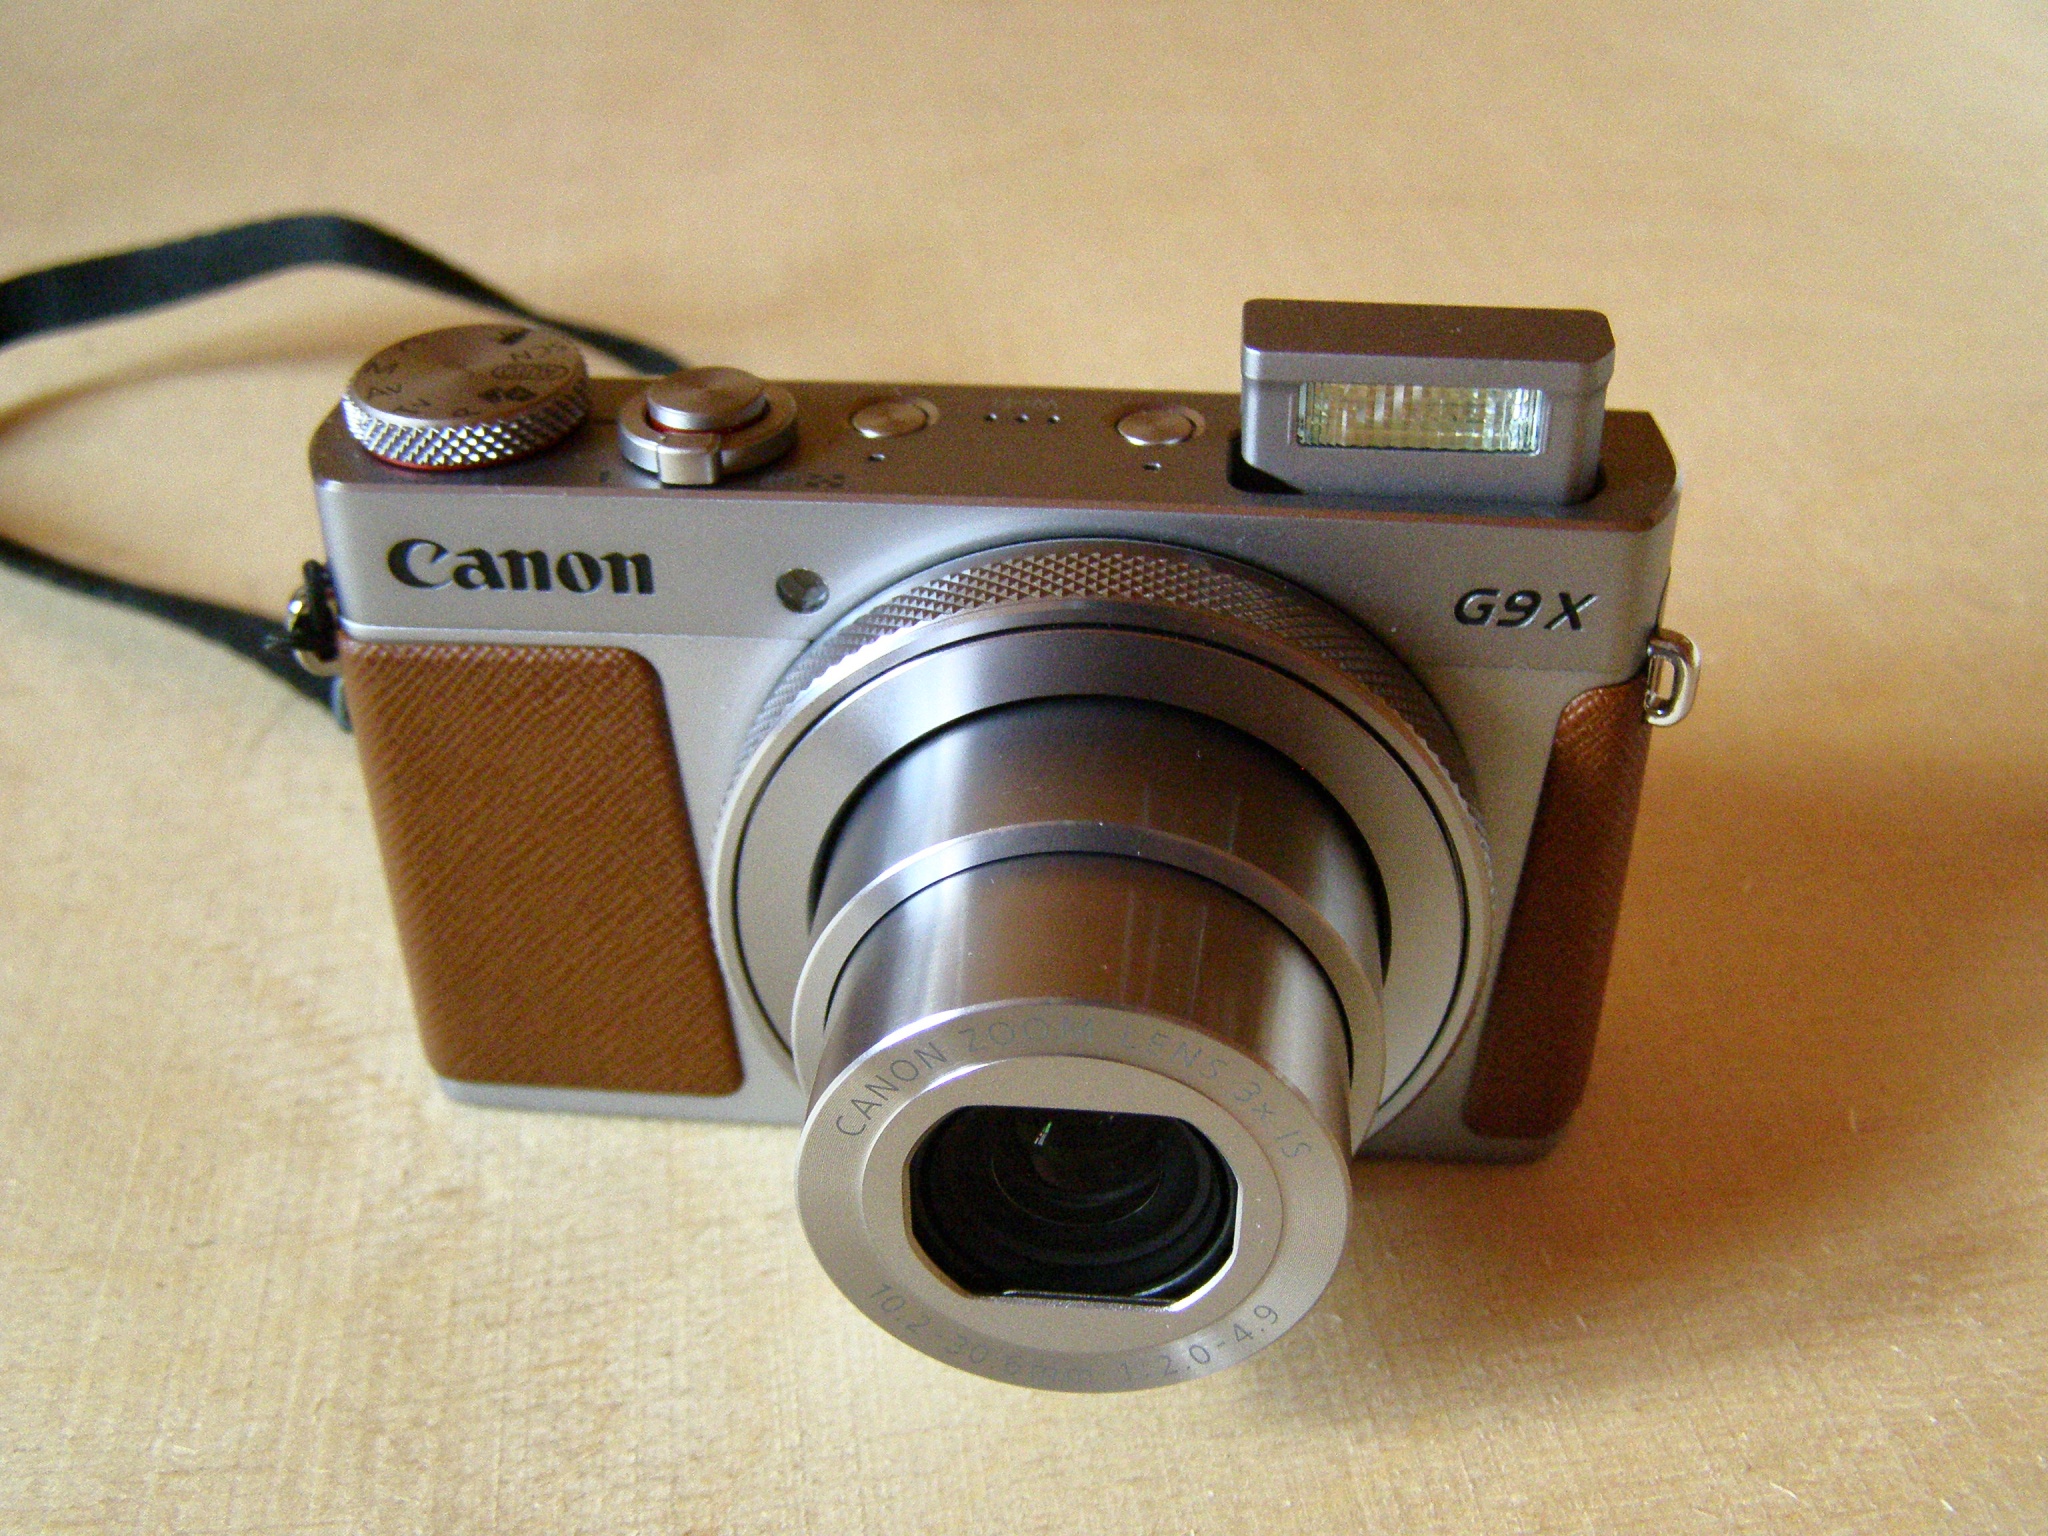 Canon powershot g9 купить. Canon POWERSHOT g9 x Mark II. Canon g9x Mark 2. Фотоаппарат Canon POWERSHOT g9. Canon g9x mk2.